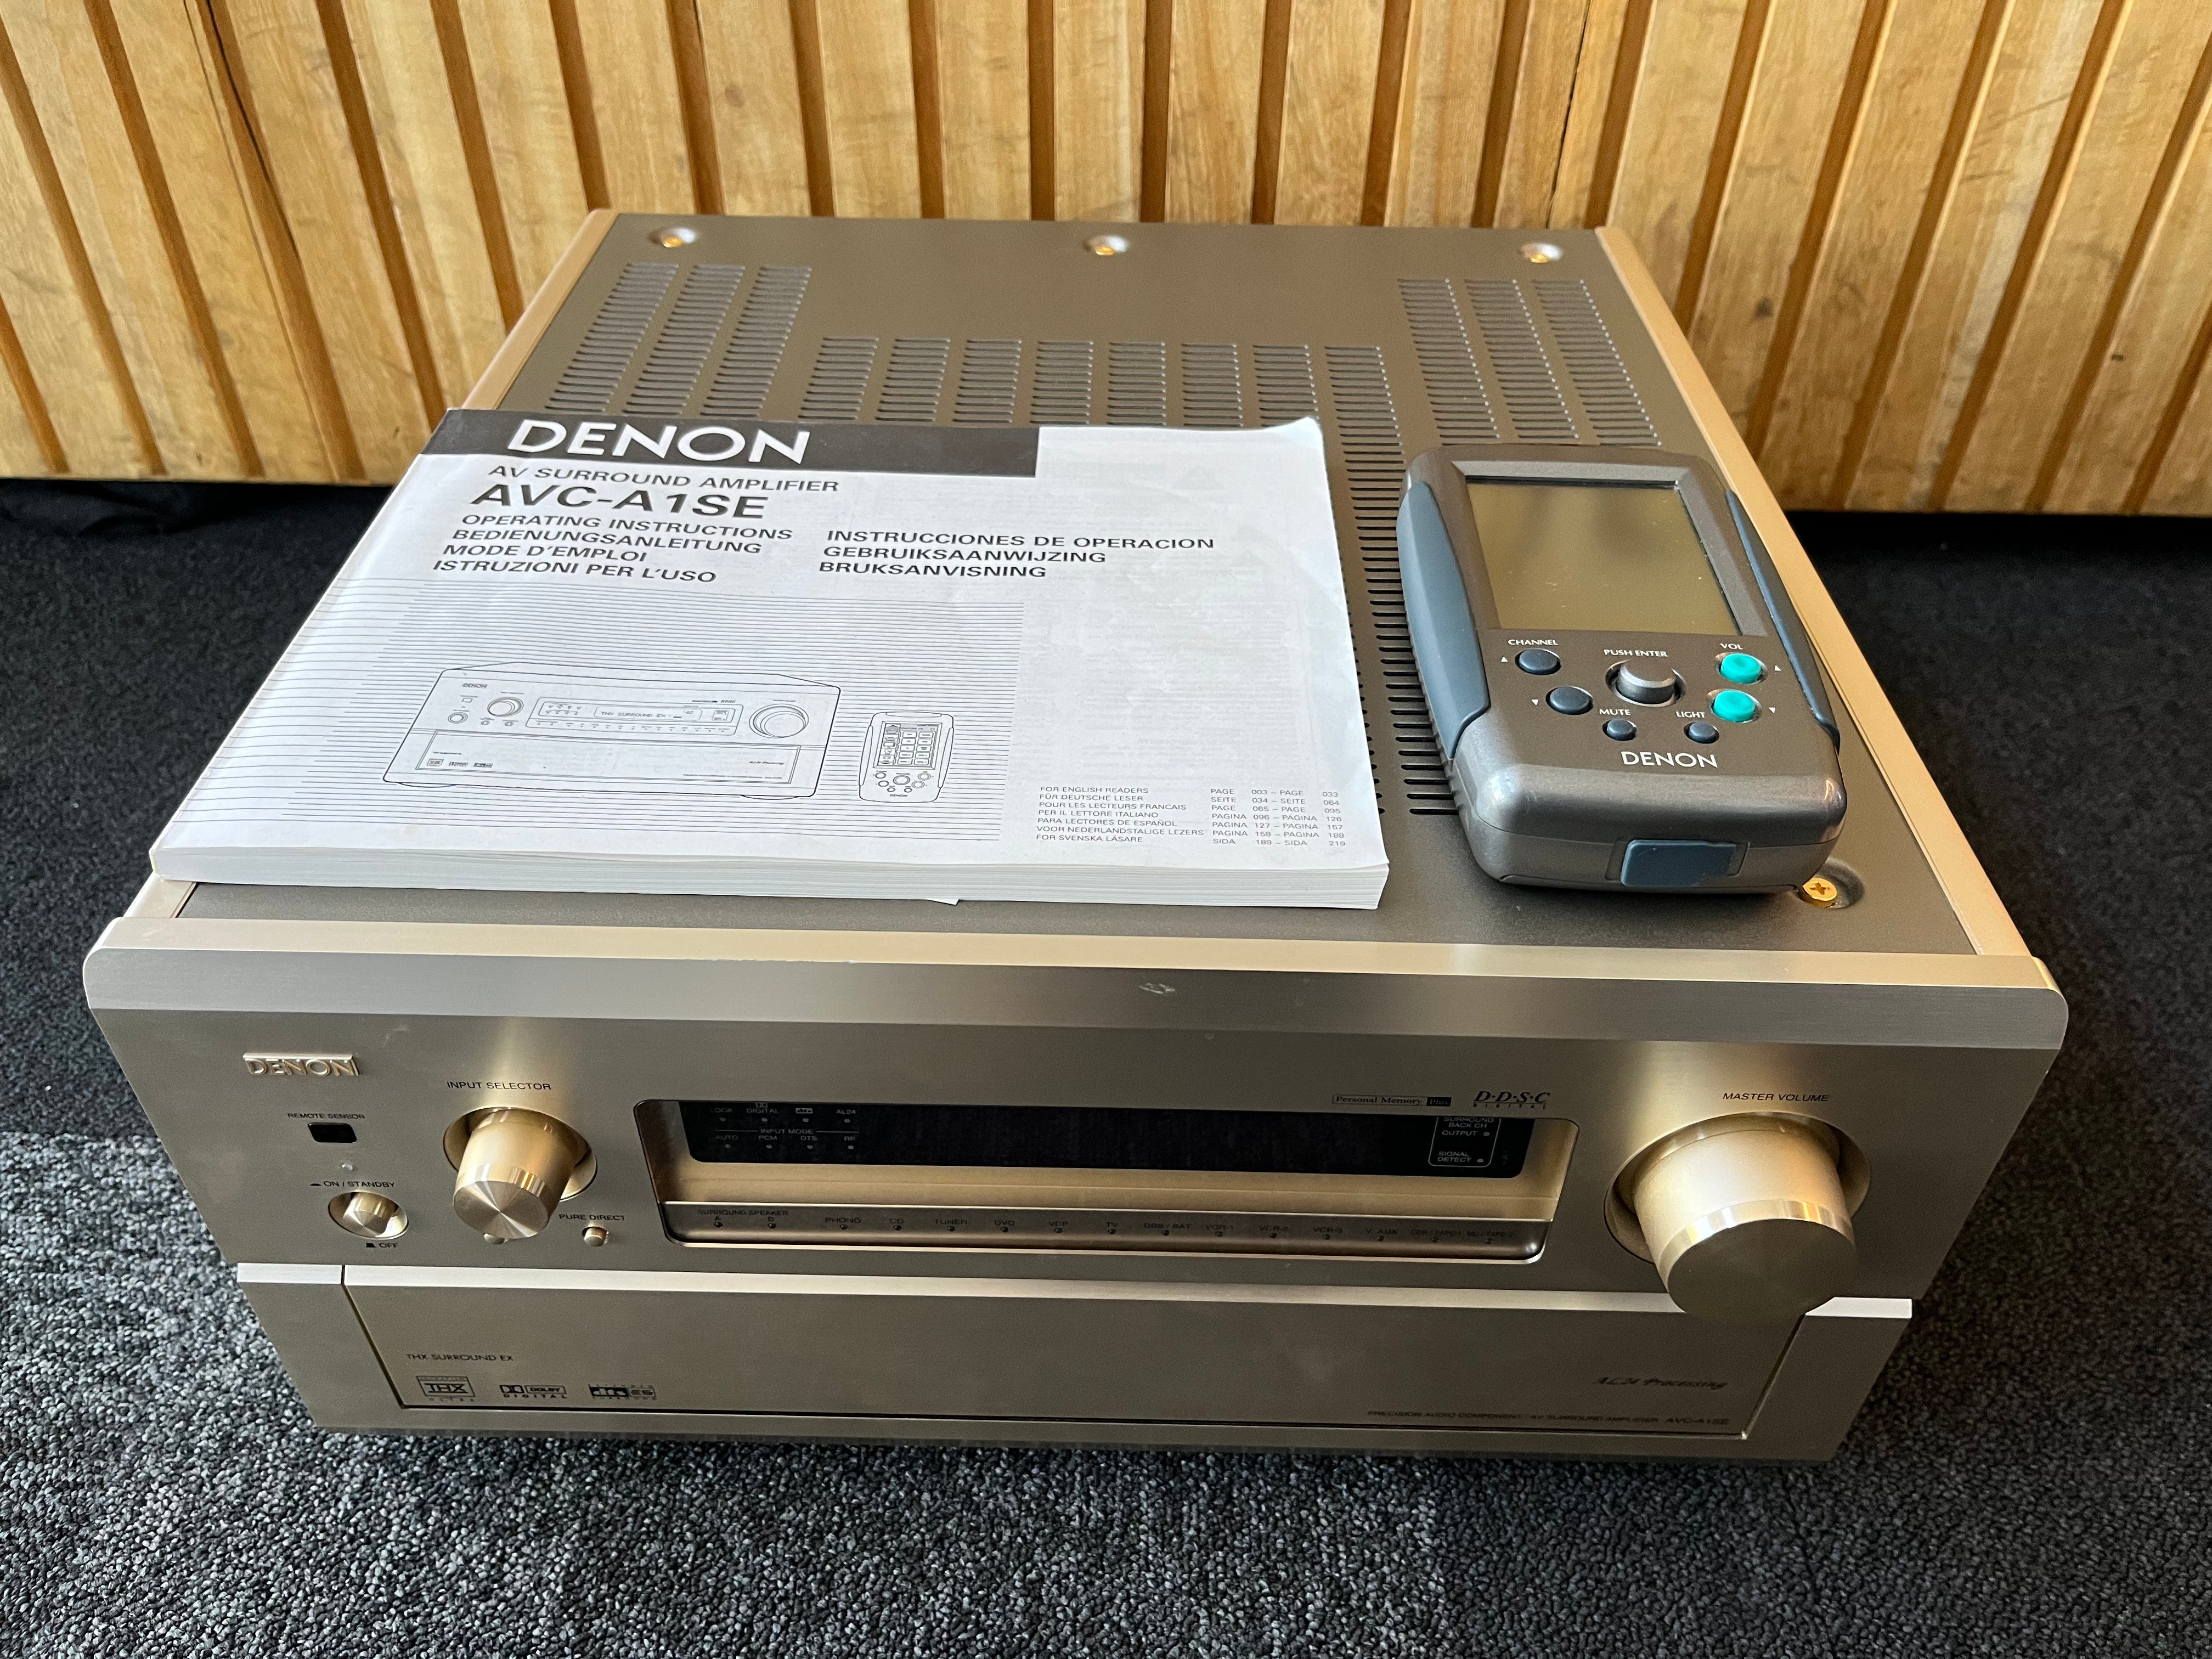 Denon AVC-A 1 SE + Denon RC-871, replacement device, location Oulu